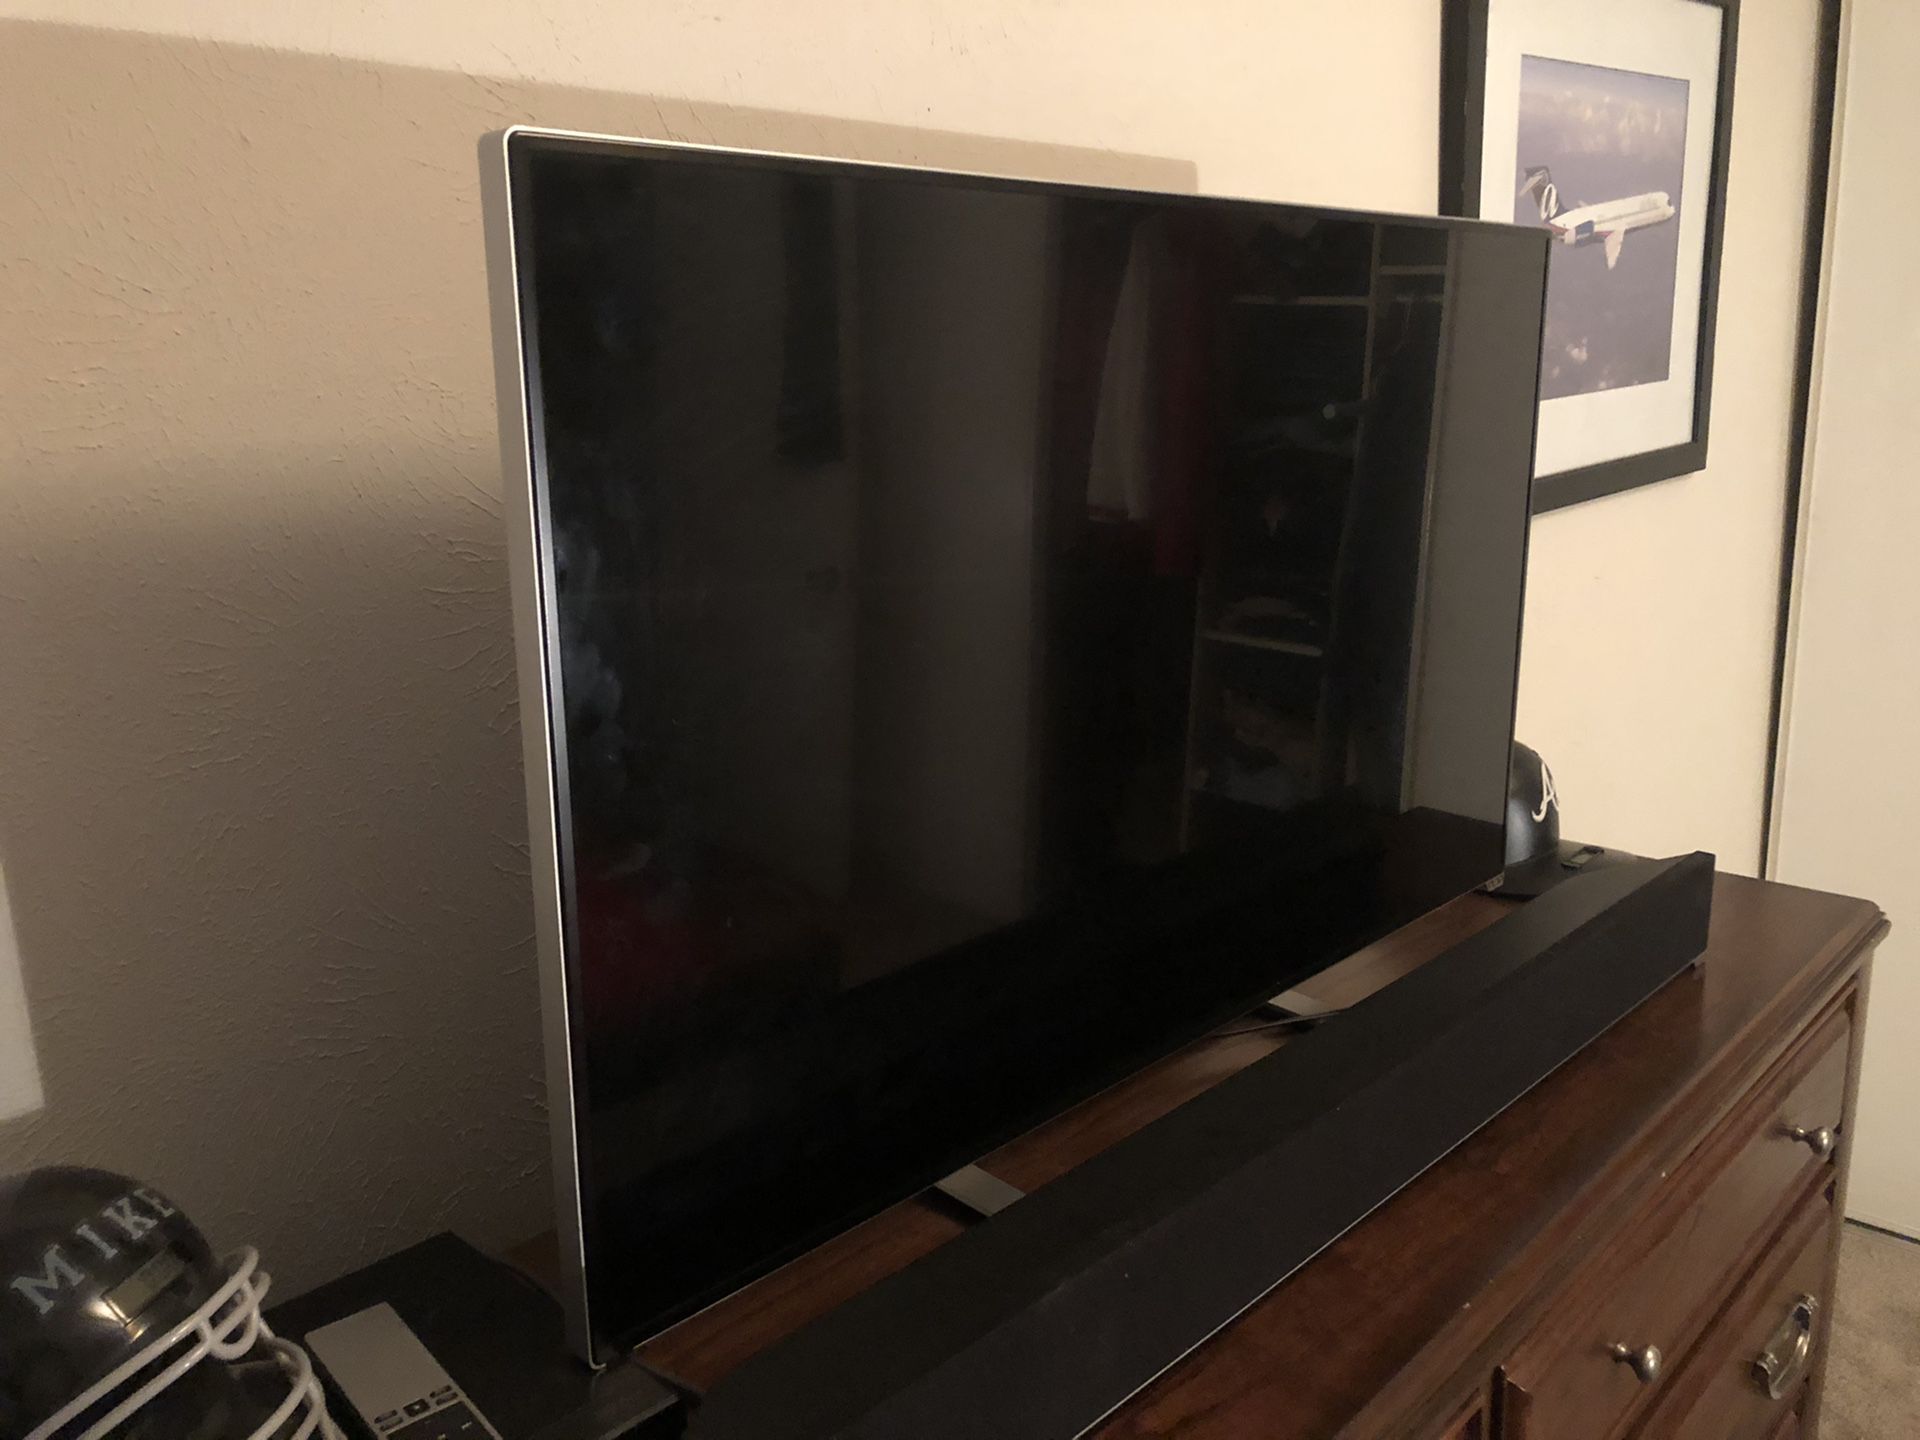 Vizio 42’ smart TV with original box.